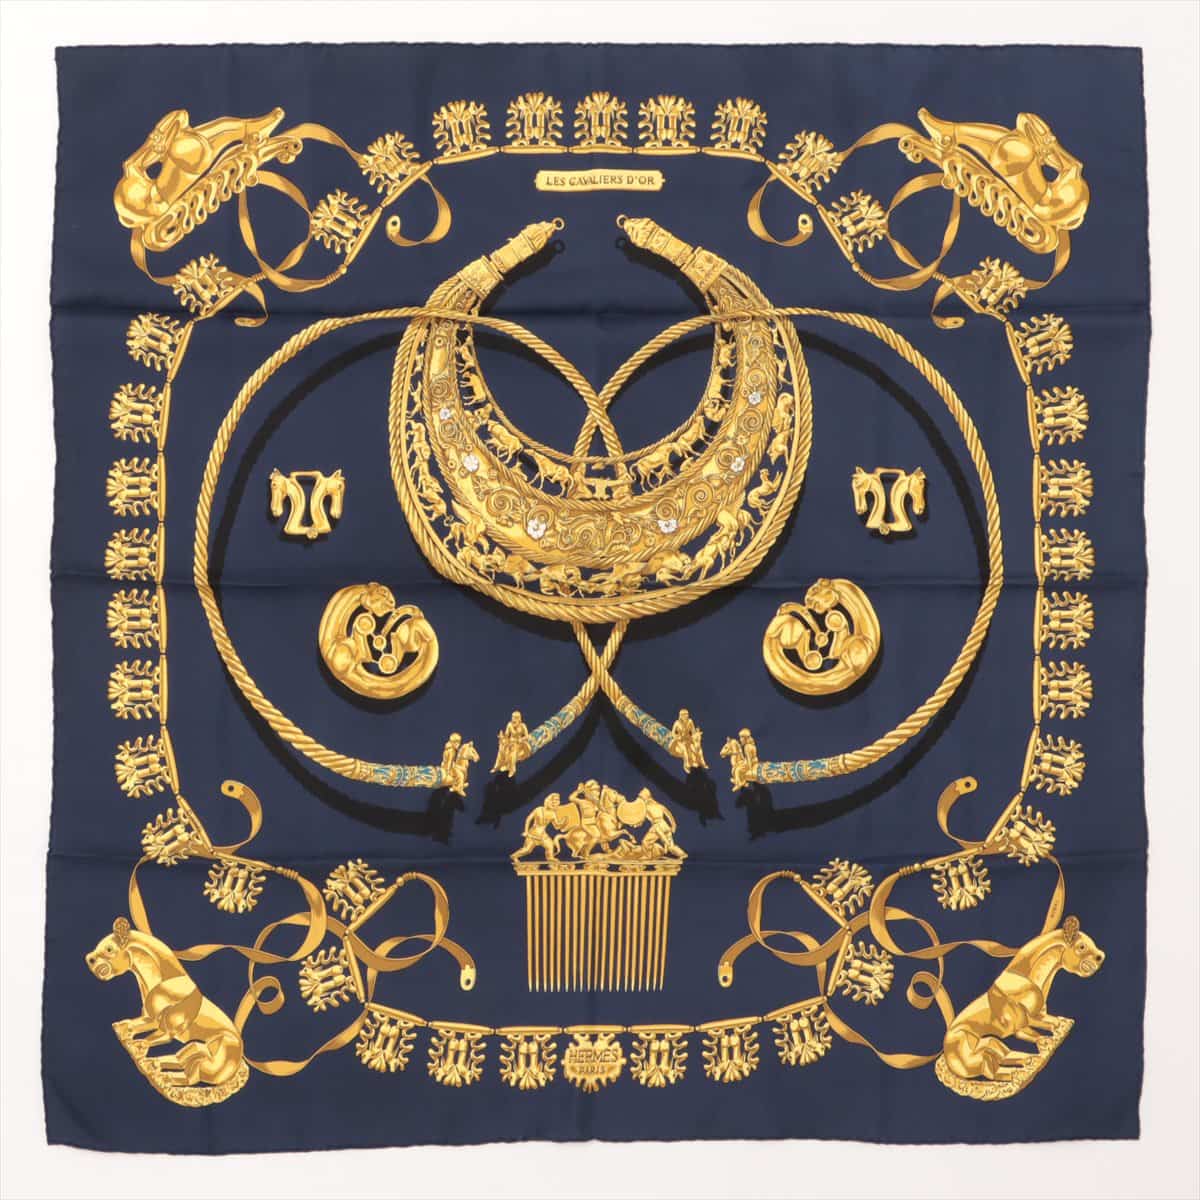 Hermès Carré 90 LES CAVALIERS D'OR The Golden Knight Scarf Silk Navy blue